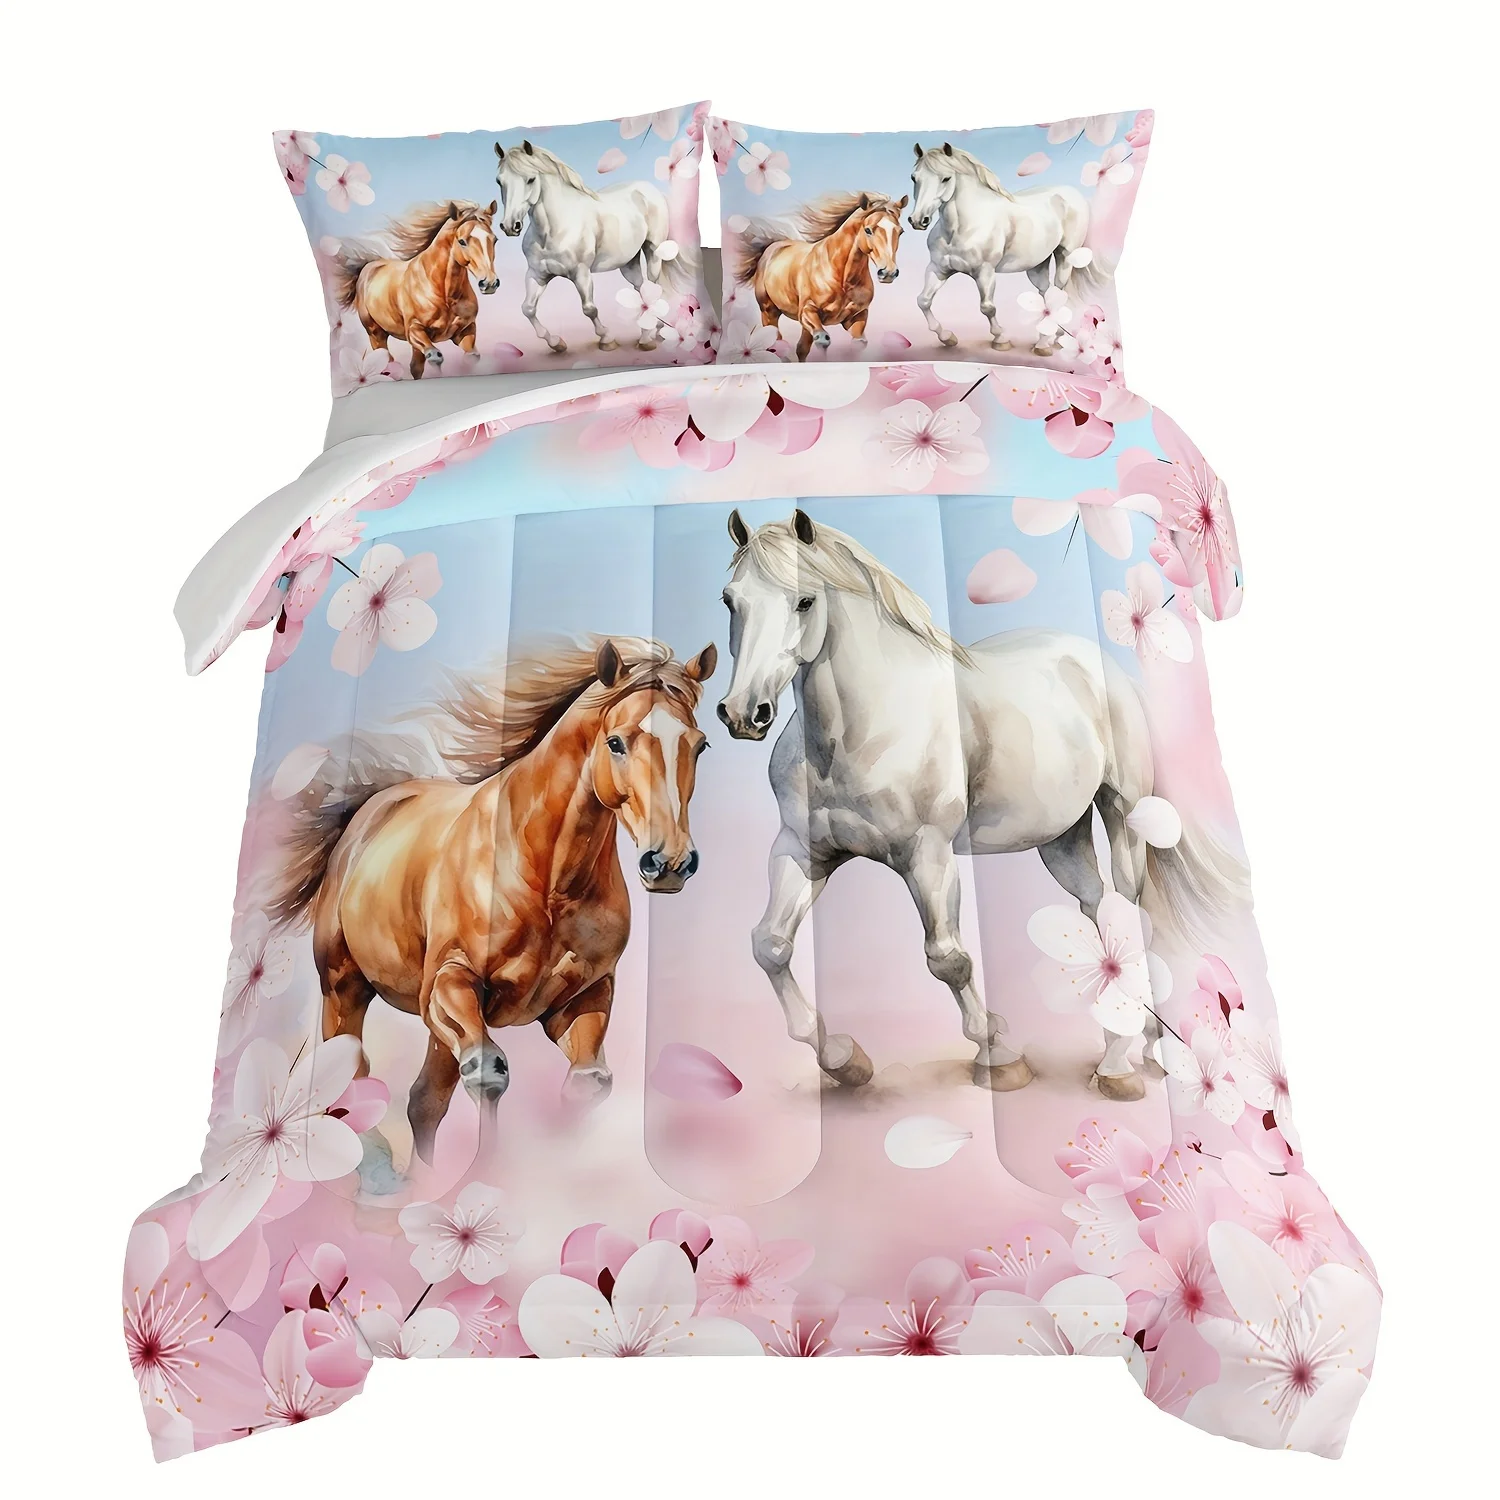 

3pcs Fashion Comforter Set (1 * Comforter + 2 * Pillowcase, No Core), Pink Sakura And Running Horse Print Bedding Set, Soft And